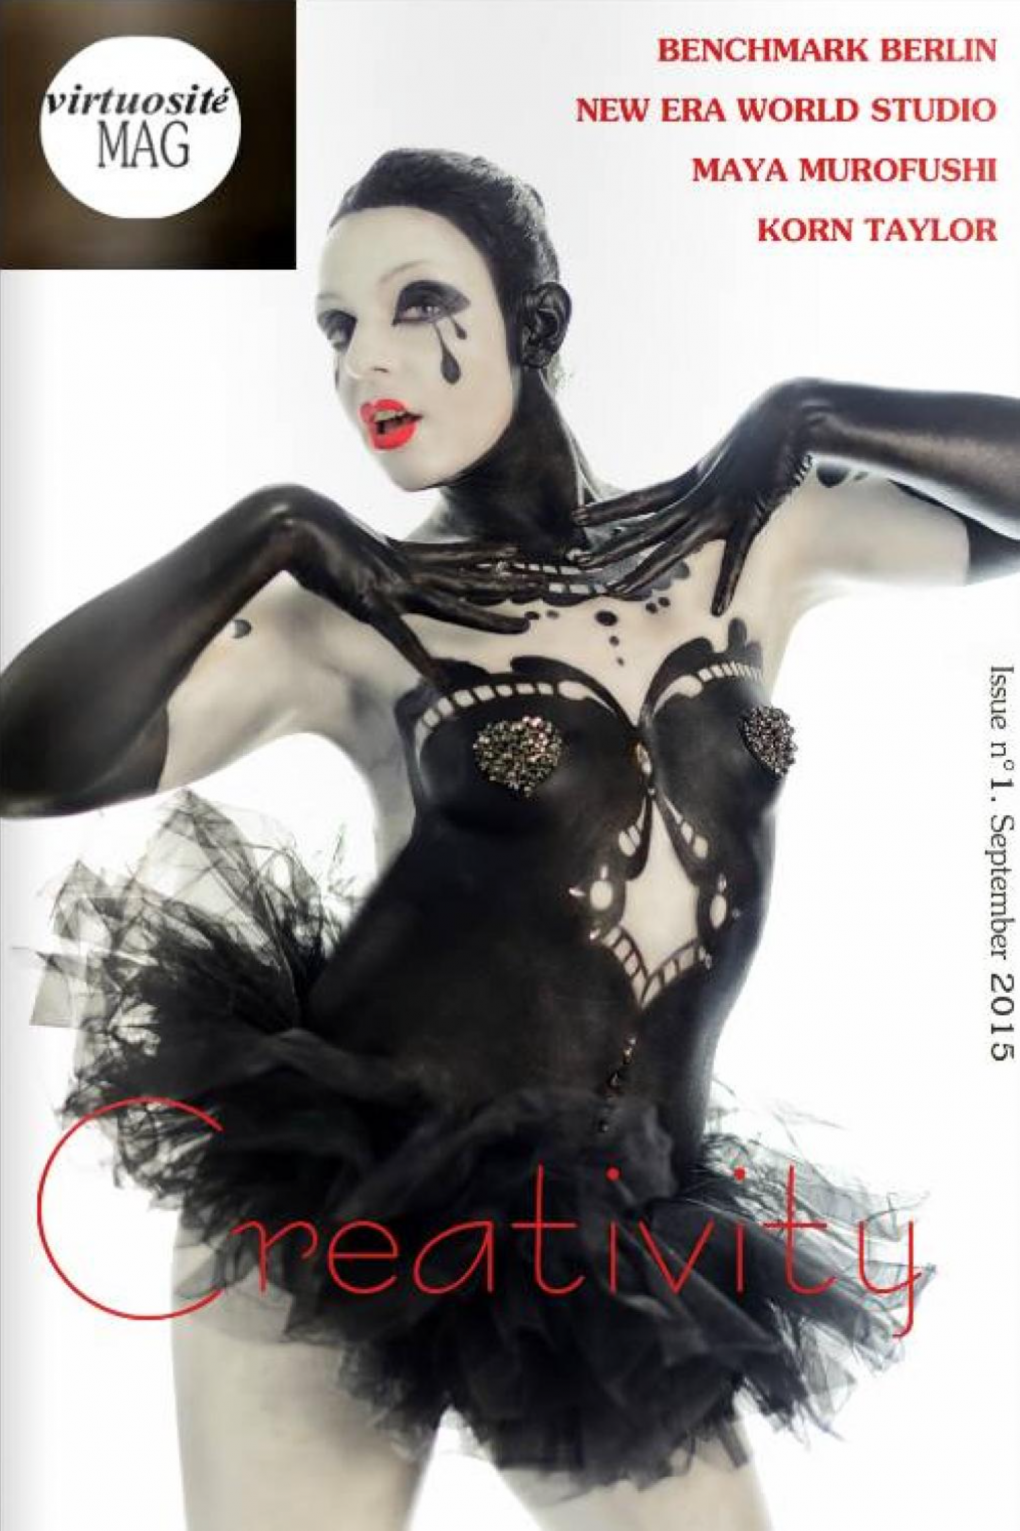 Virtuosité Magazine 1 - Creativity